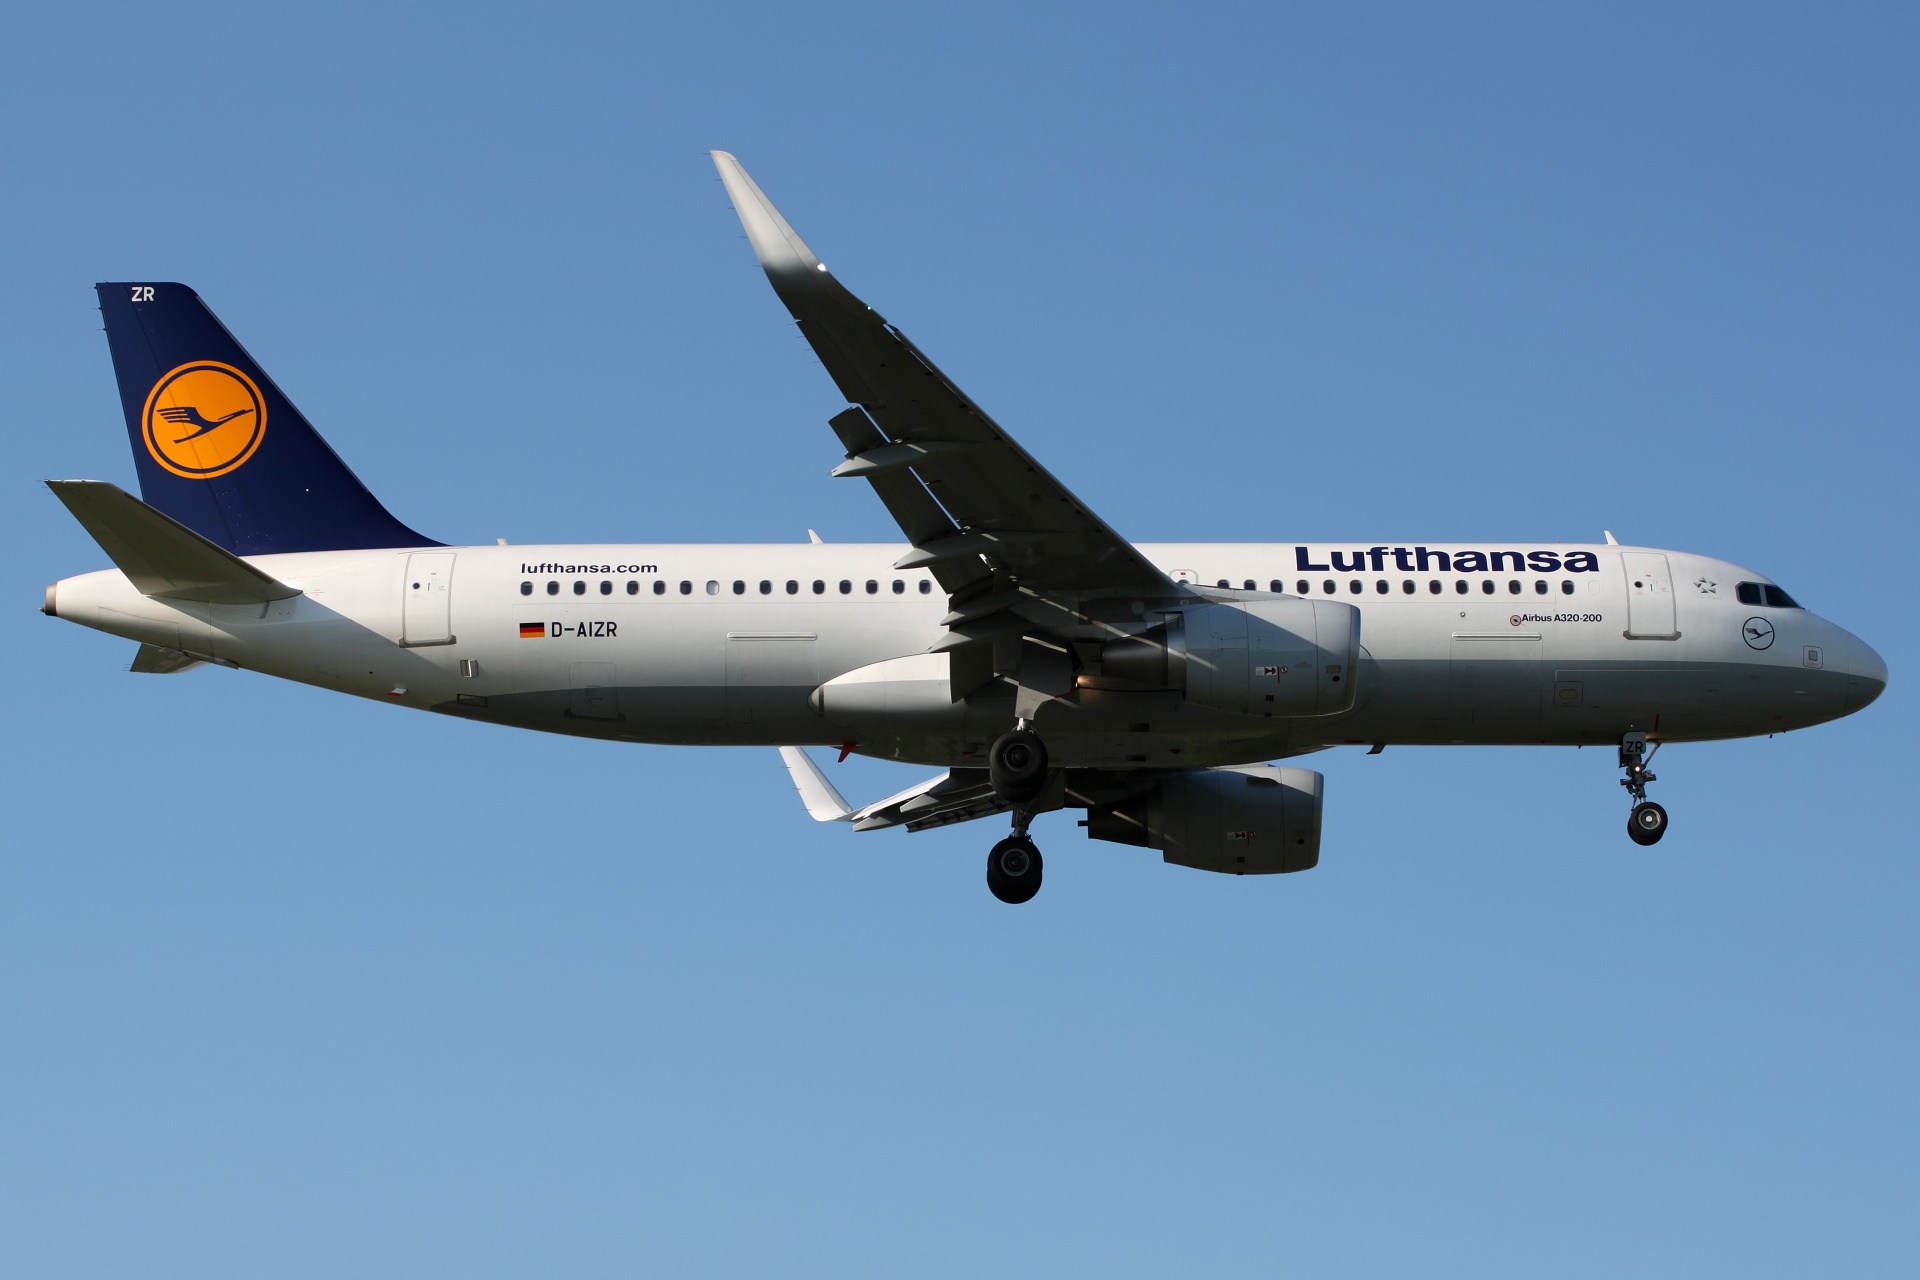 D-AIZR (Aircraft » EPWA Spotting » Airbus A320-200 » Lufthansa)